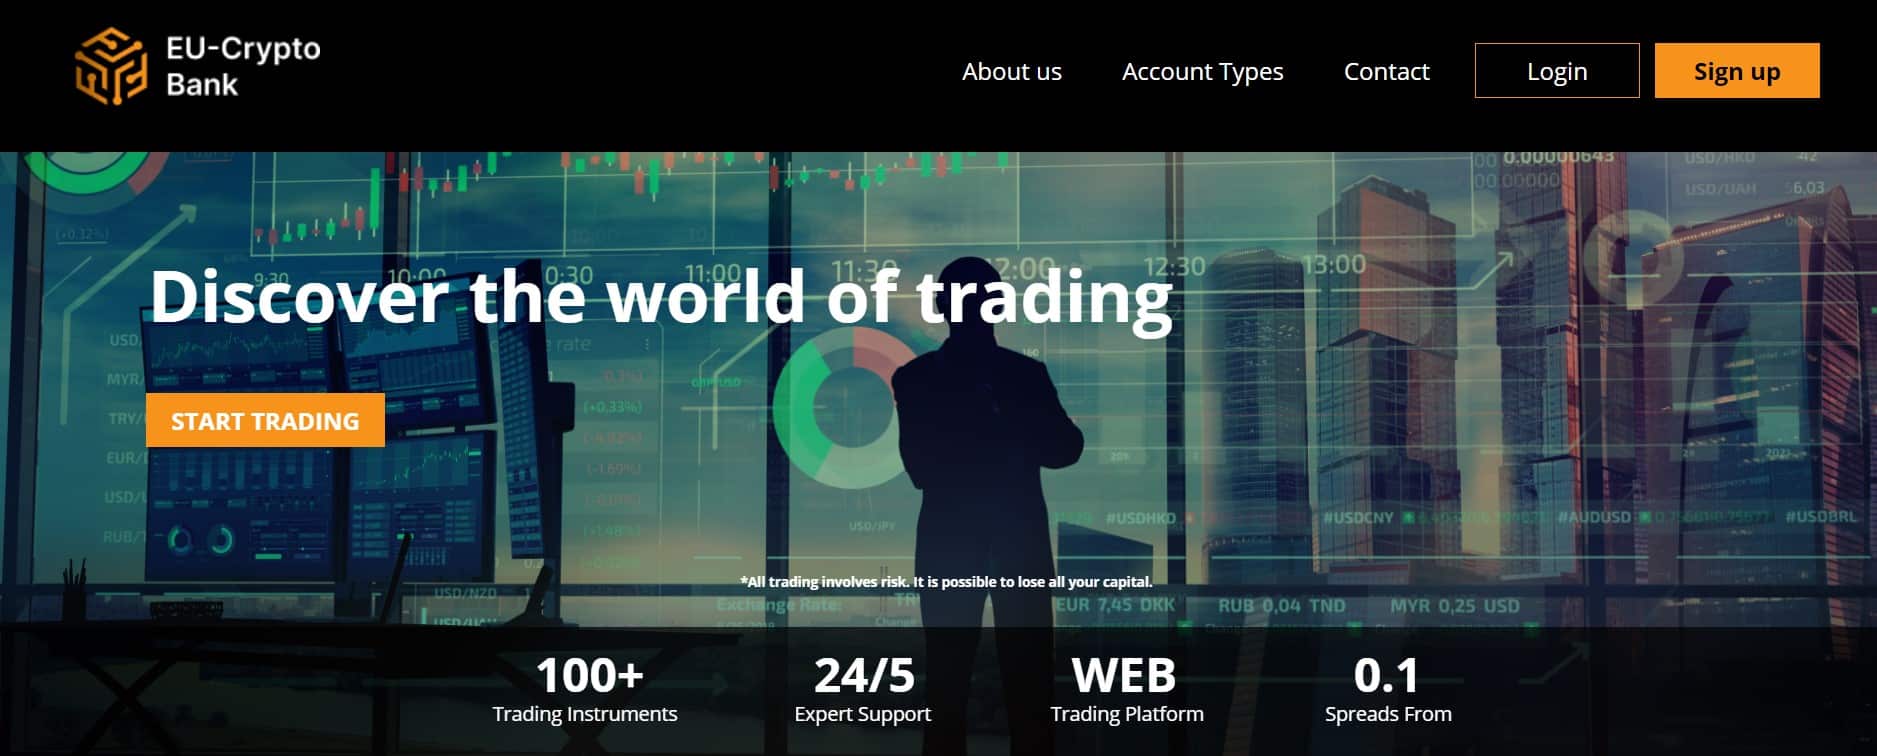 EU-Crypto Bank website